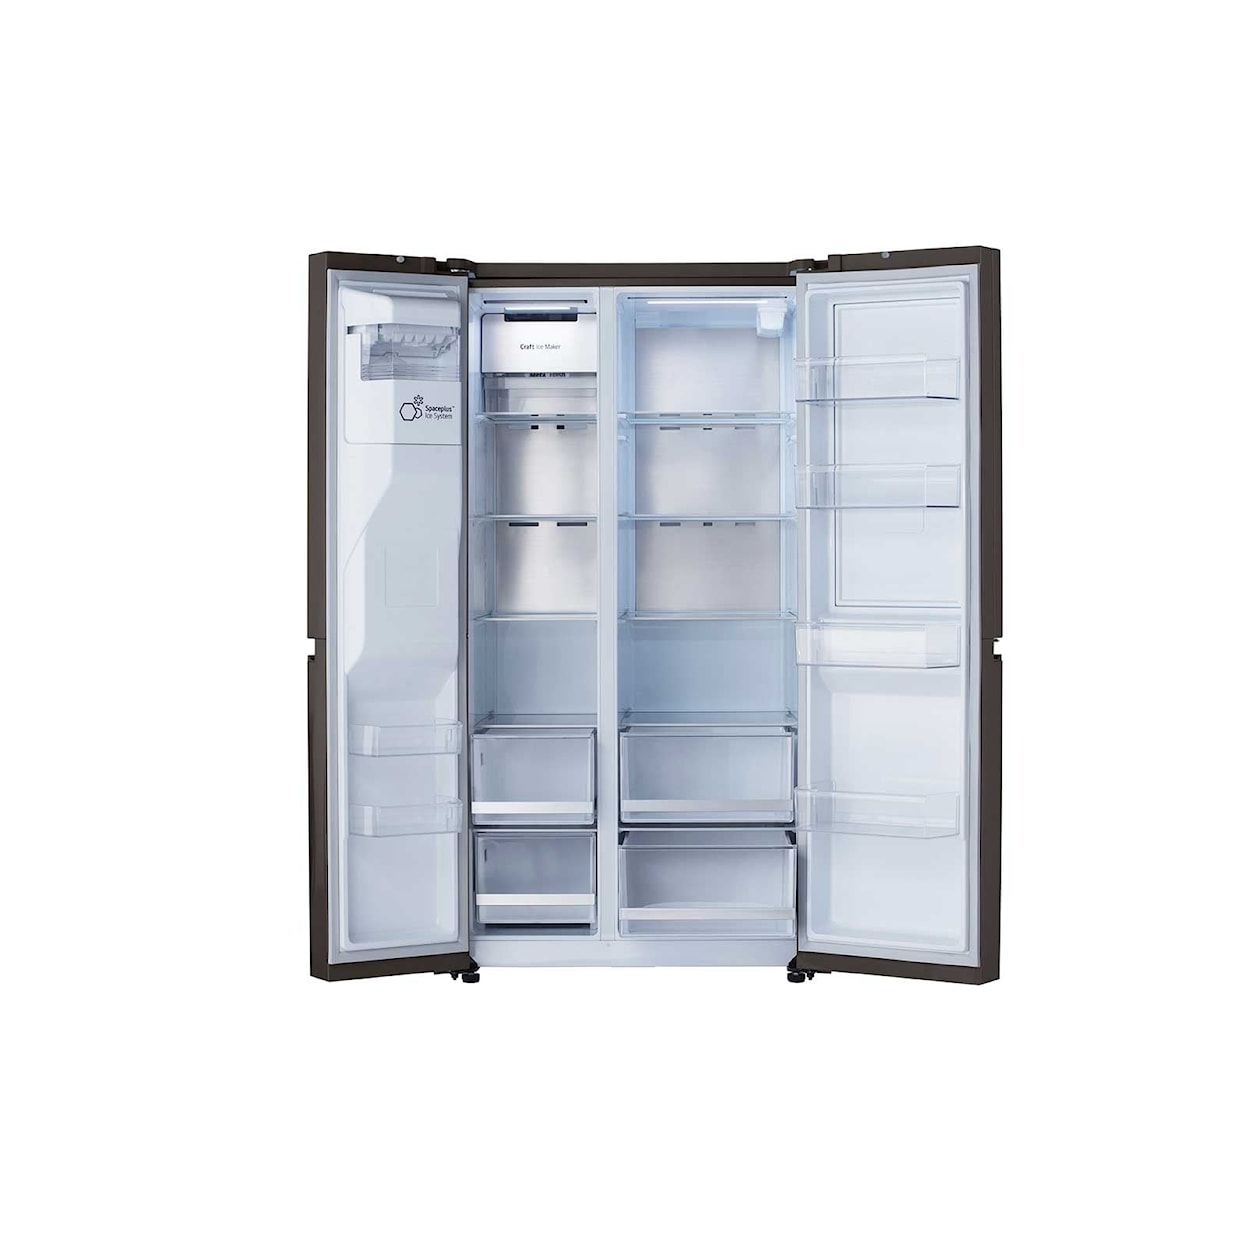 LG Appliances Refrigerators Side By Side Freestanding Refrigerator